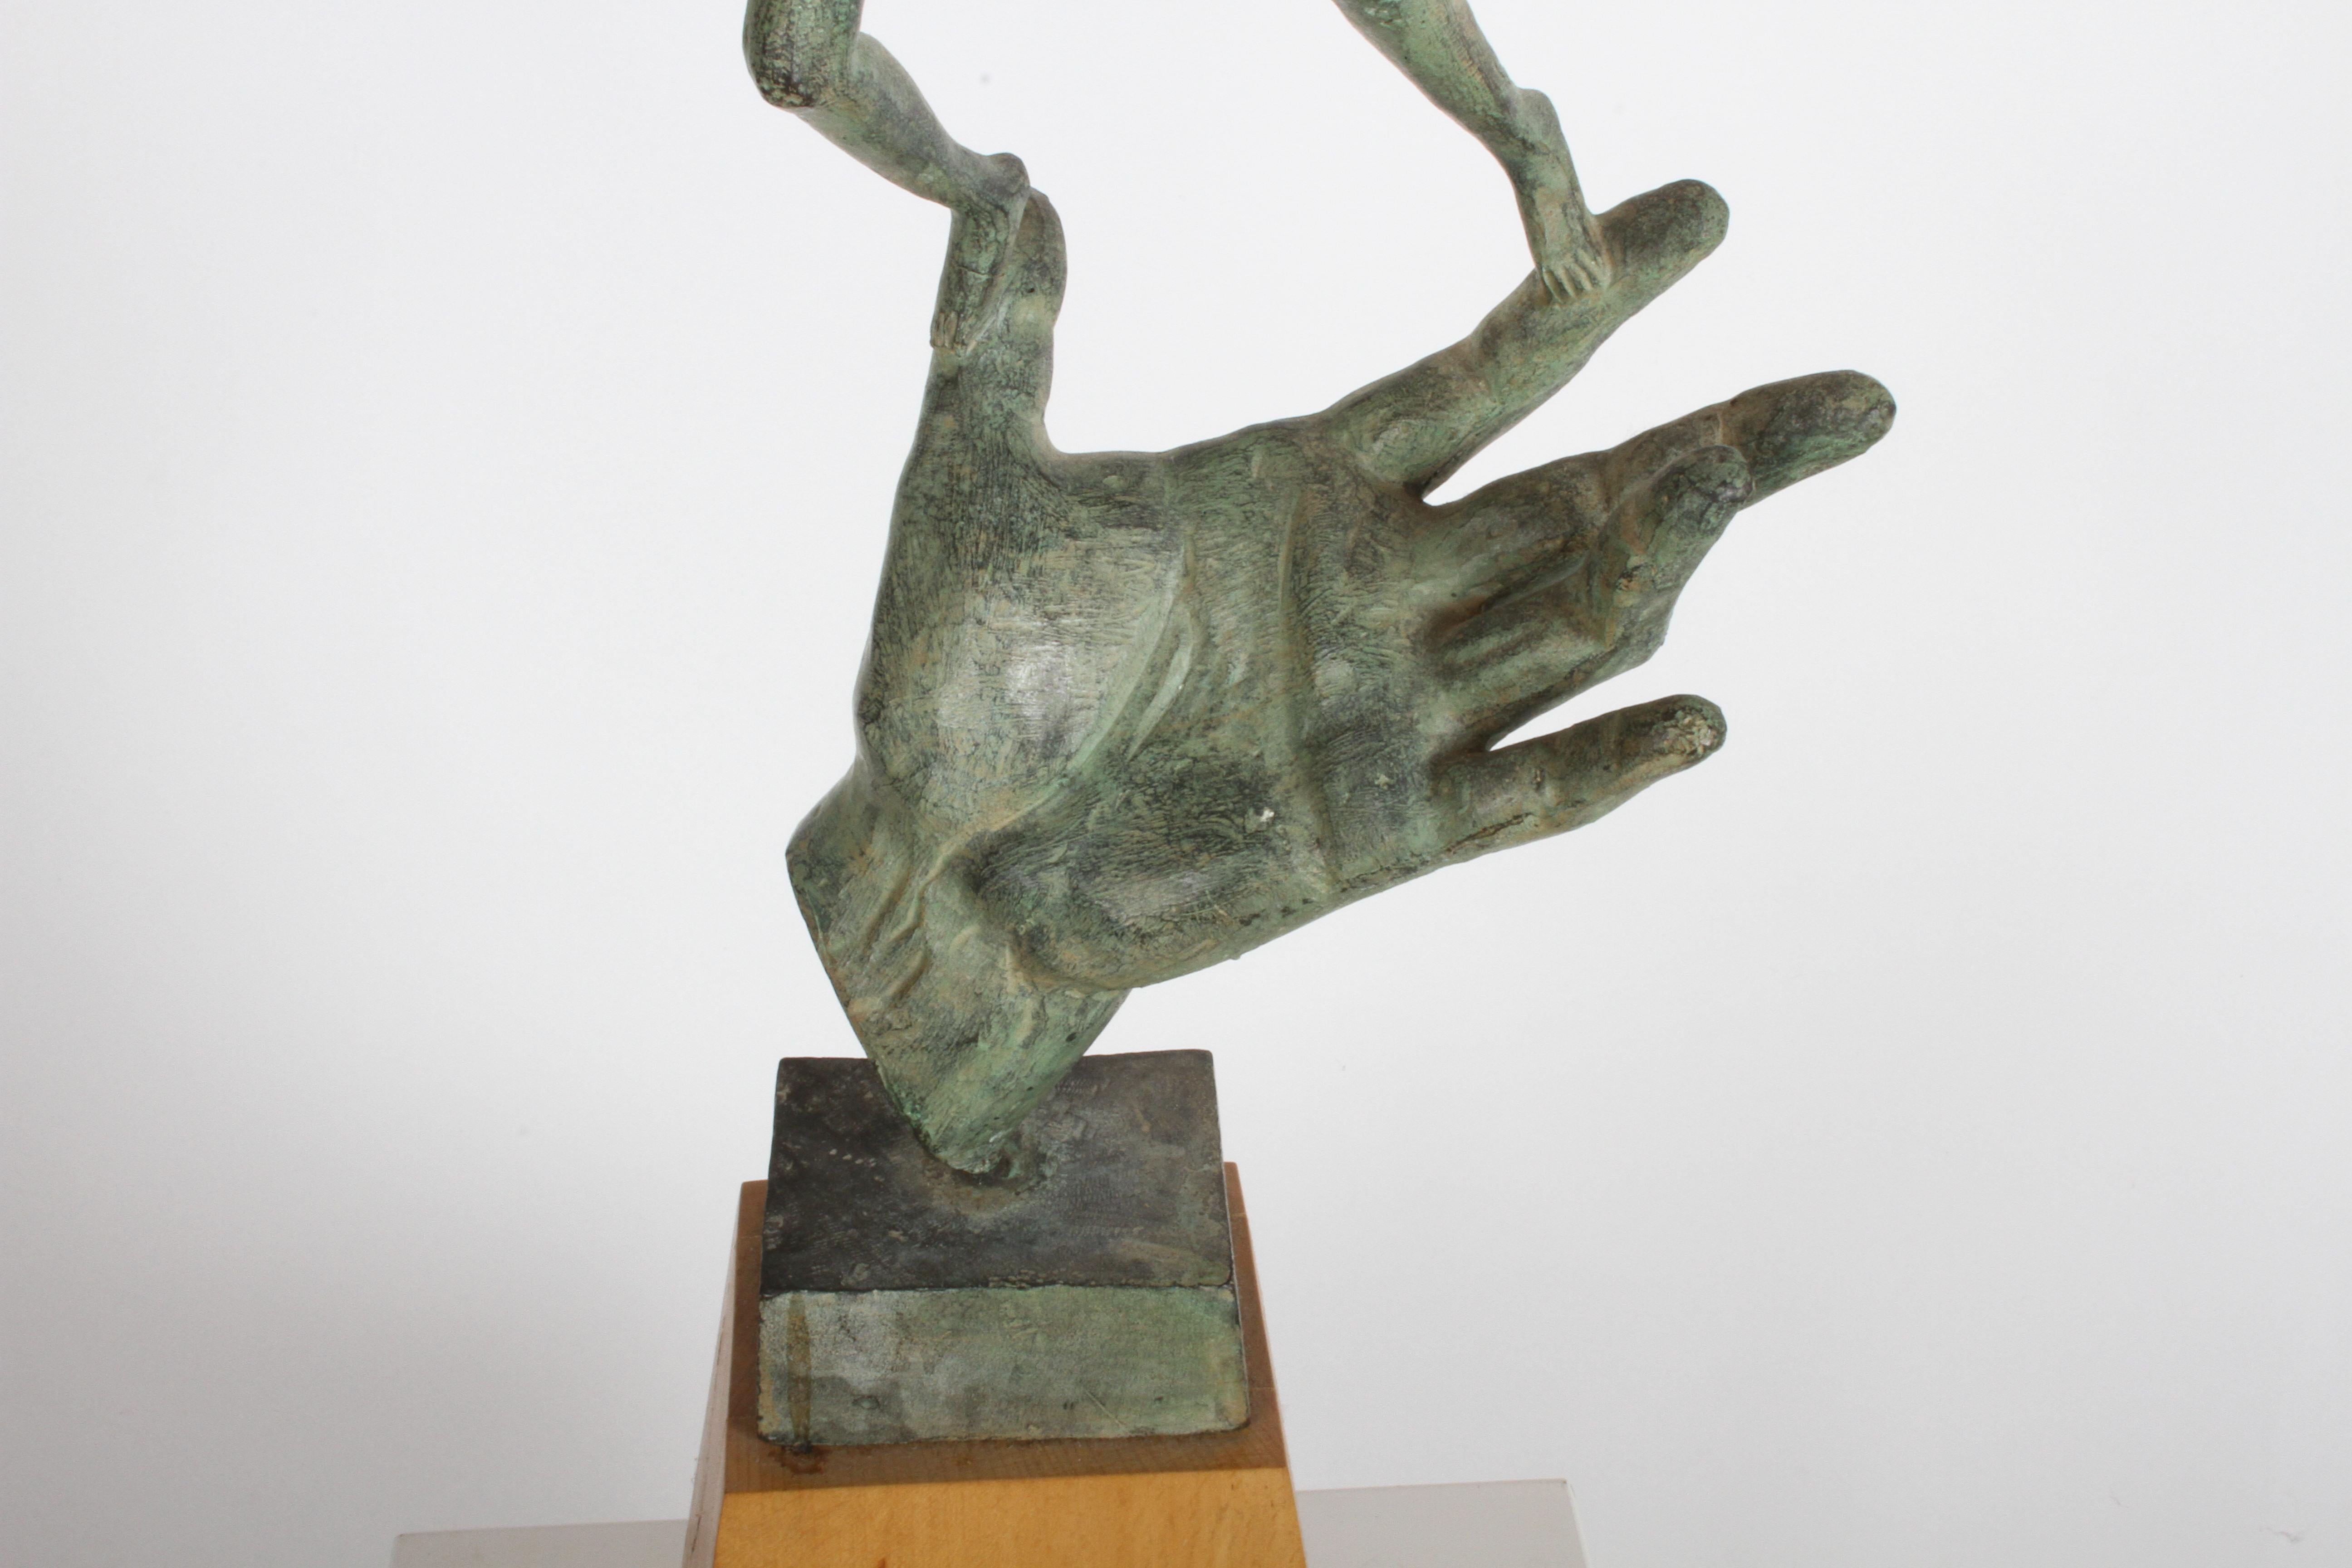  The Hand of God Bronze Sculpture After Carl Milles Sculptor  5